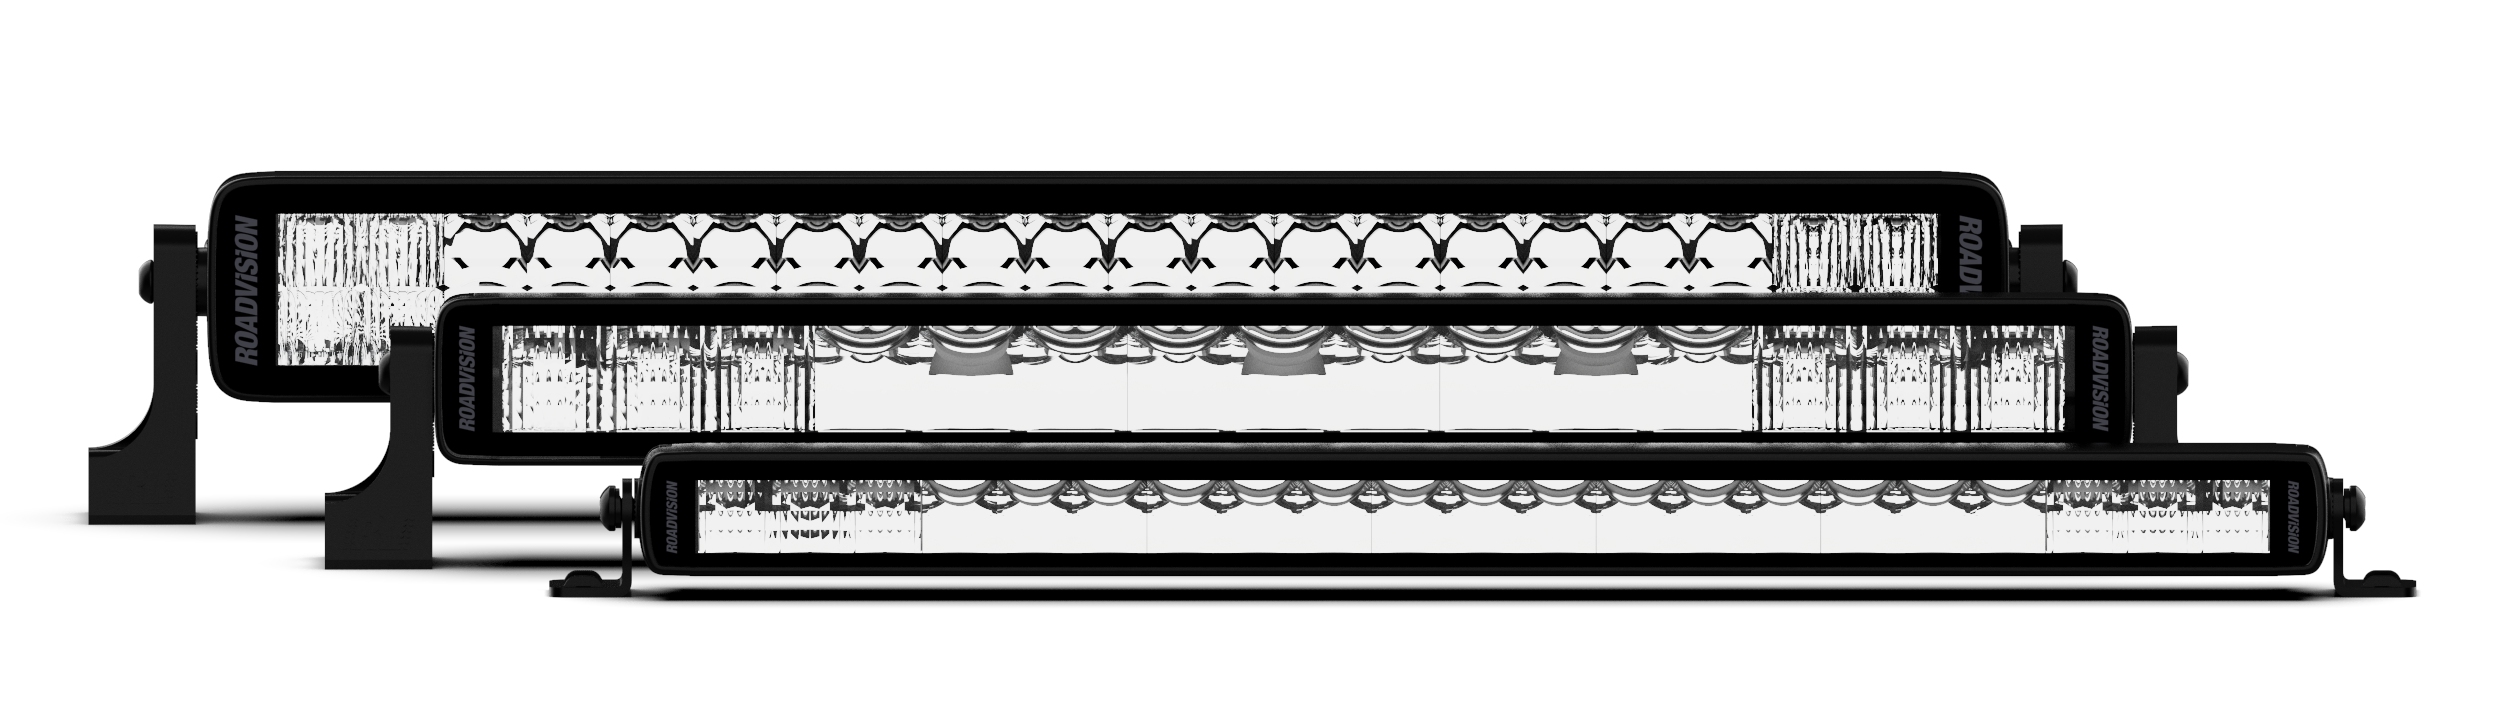 ROADVISION - DC2 SERIES - 14 Inch 72w Combination Light Bar